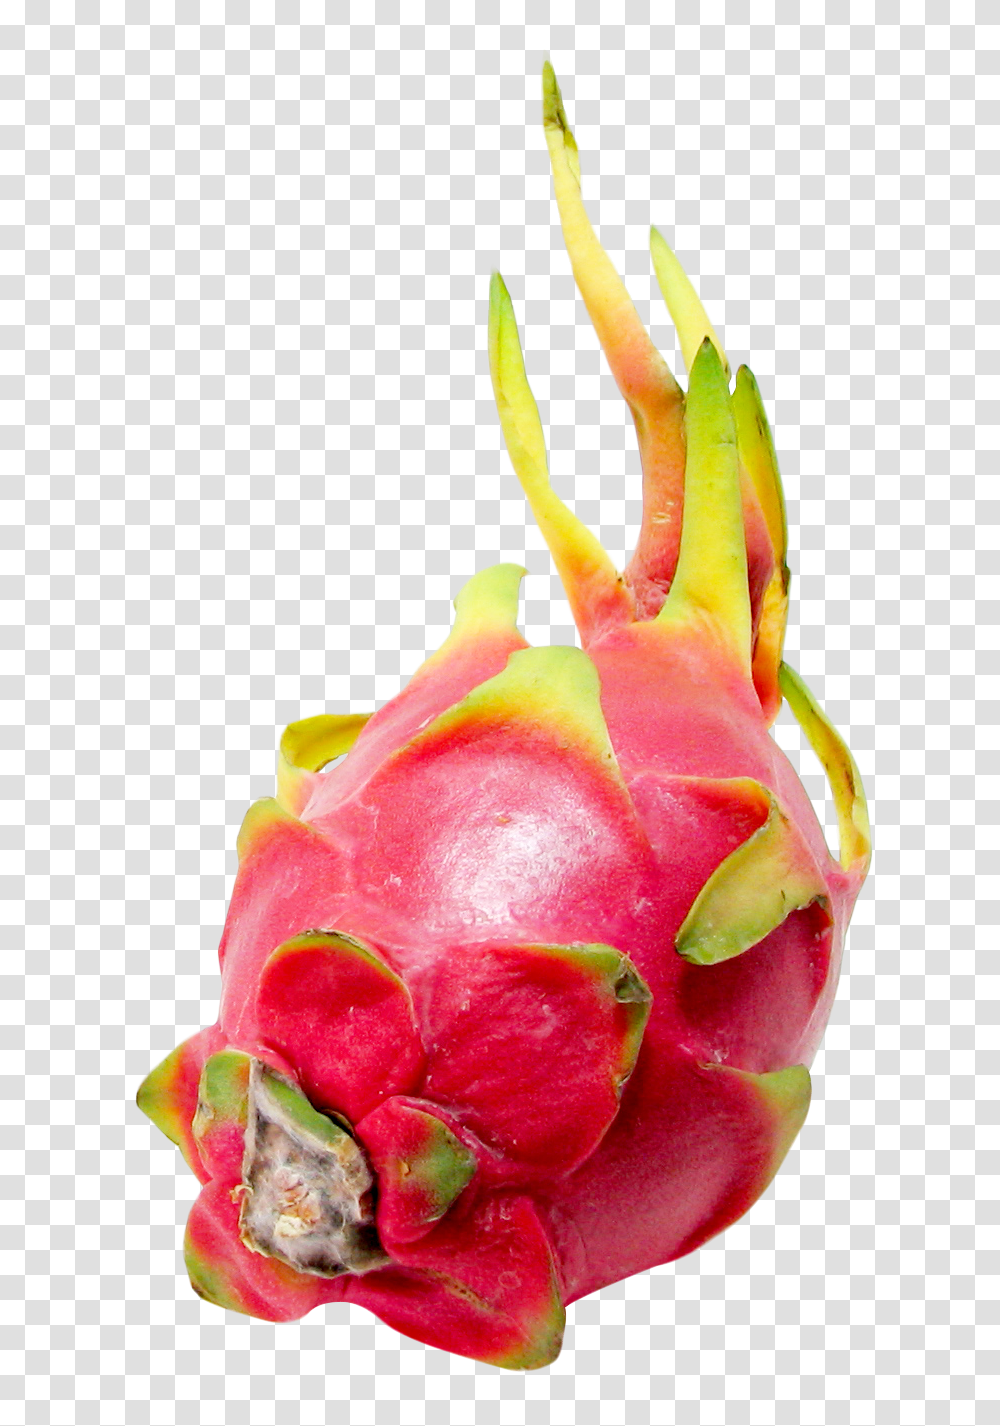 Pitaya Or Dragon Fruit Image, Plant, Food, Strawberry, Pineapple Transparent Png